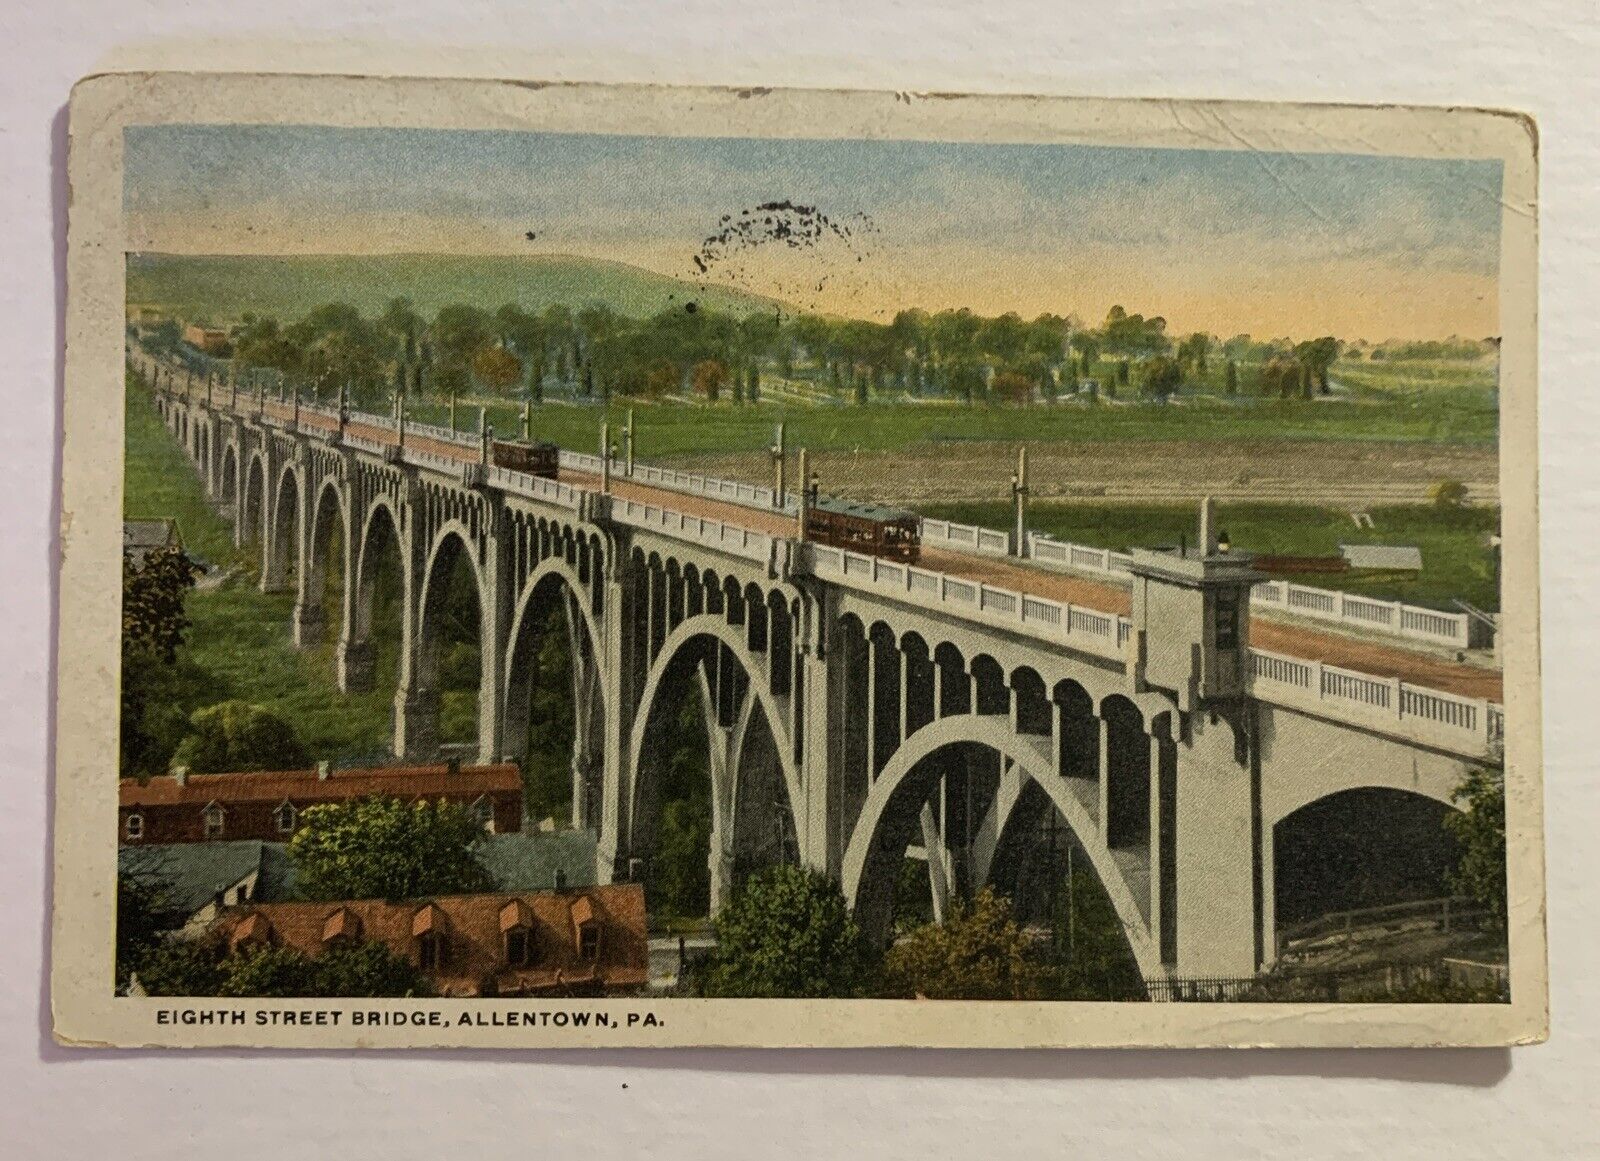 VTG Allentown PA Eighth Street Bridge Postcard  c1923. DVB PSD WB